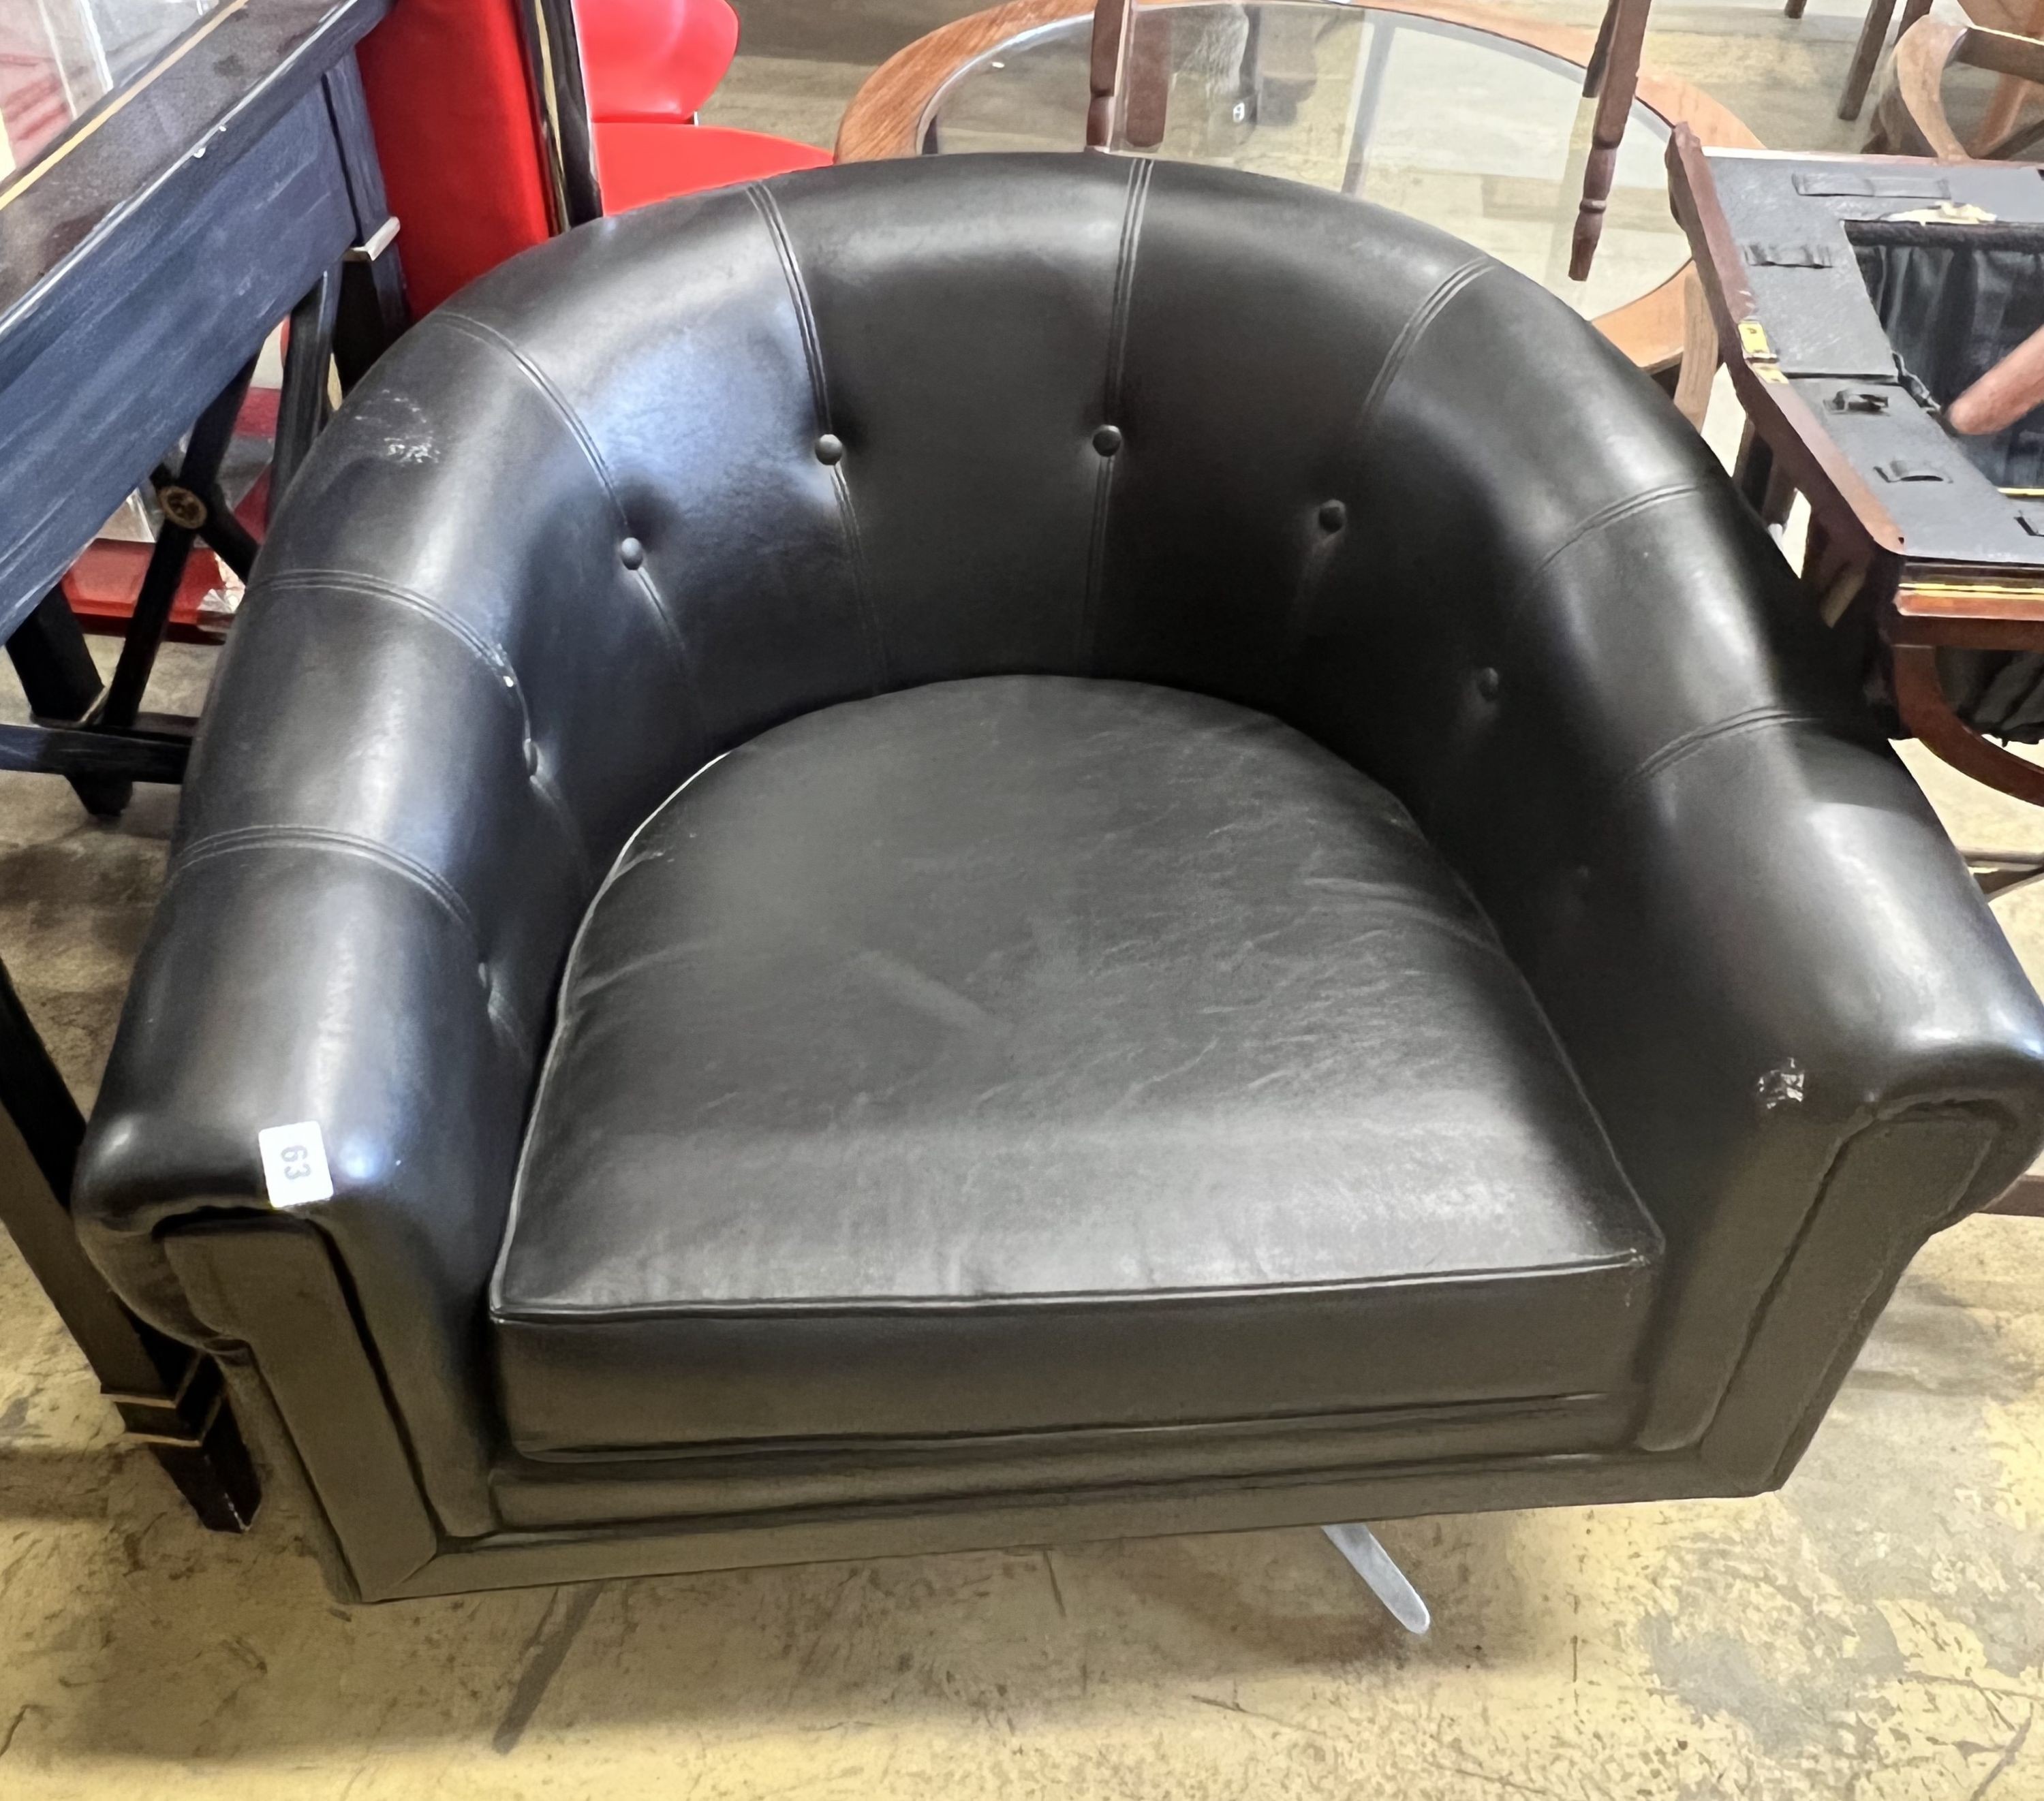 A contemporary leatherette swivel chair, width 84cm, depth 76cm, height 61cm